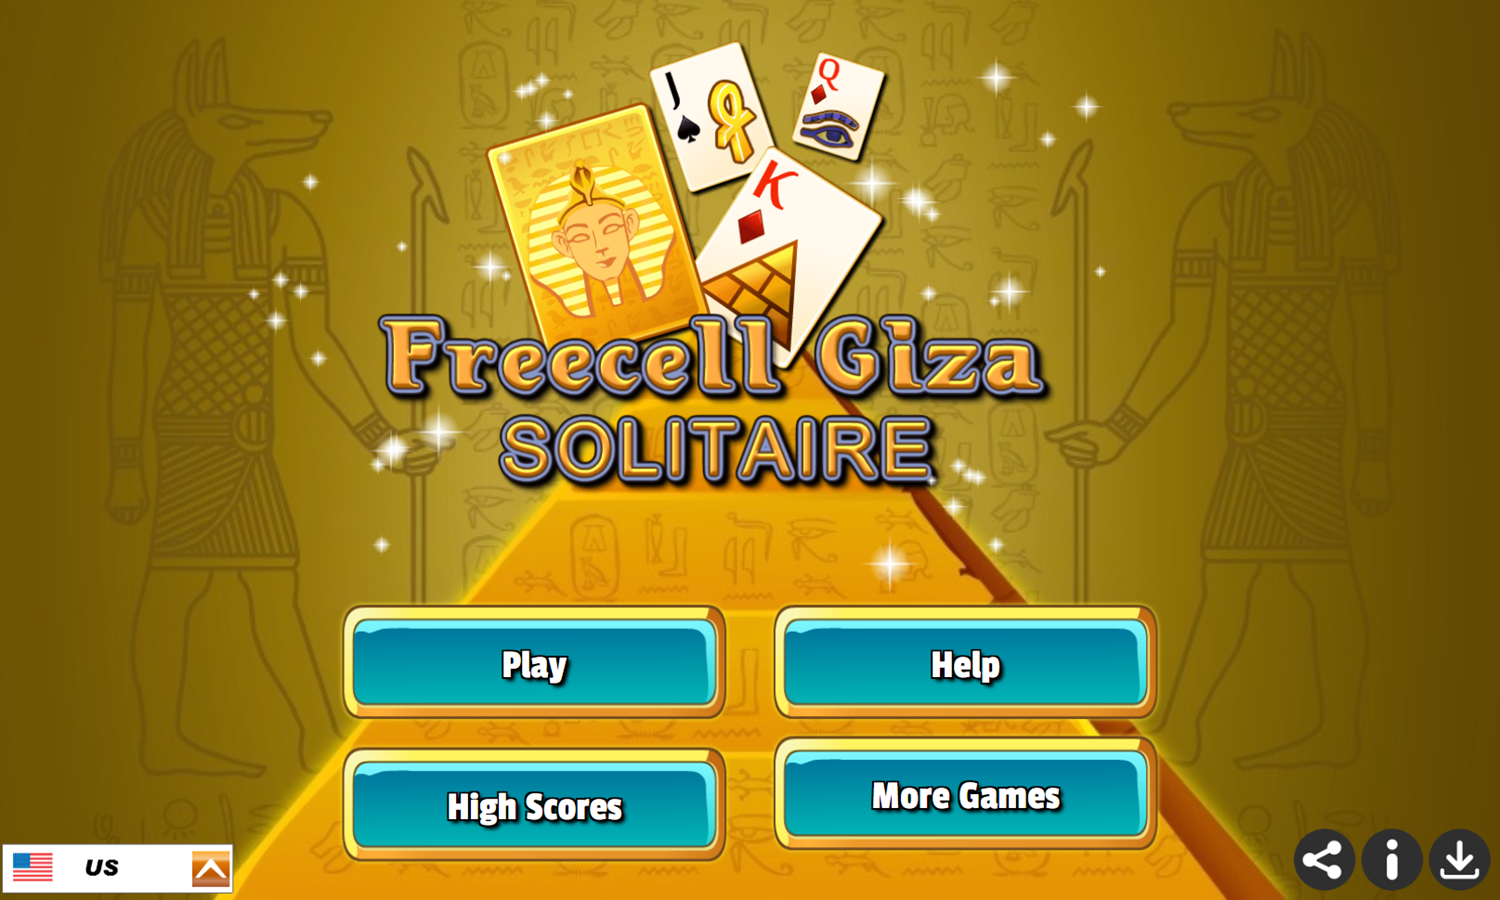 Freecell Giza Solitaire Game Welcome Screen Screenshot.